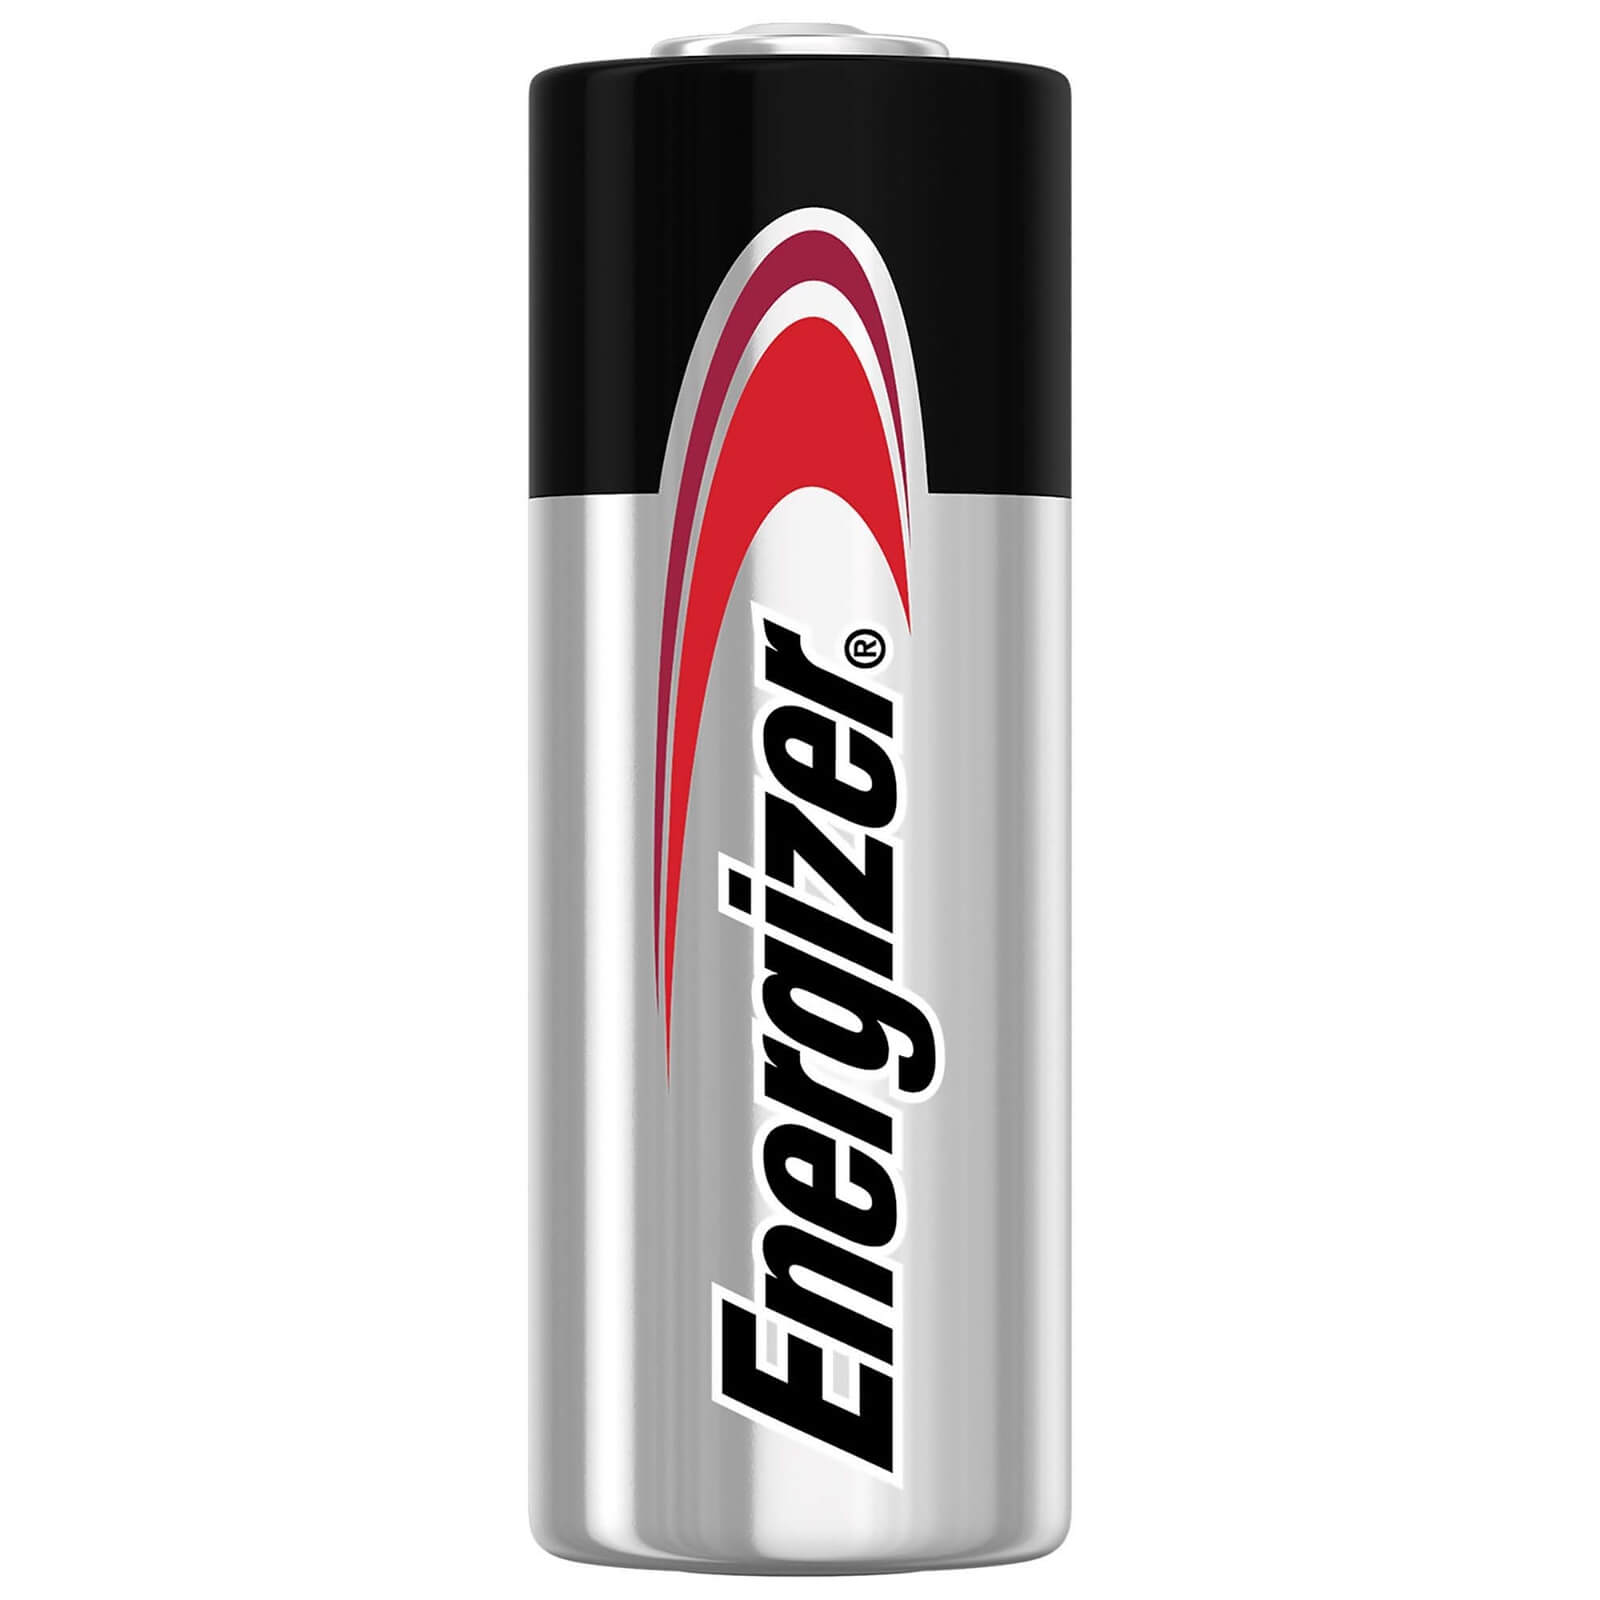 Energizer A23 Miniature Alkaline Battery - 1 Pack